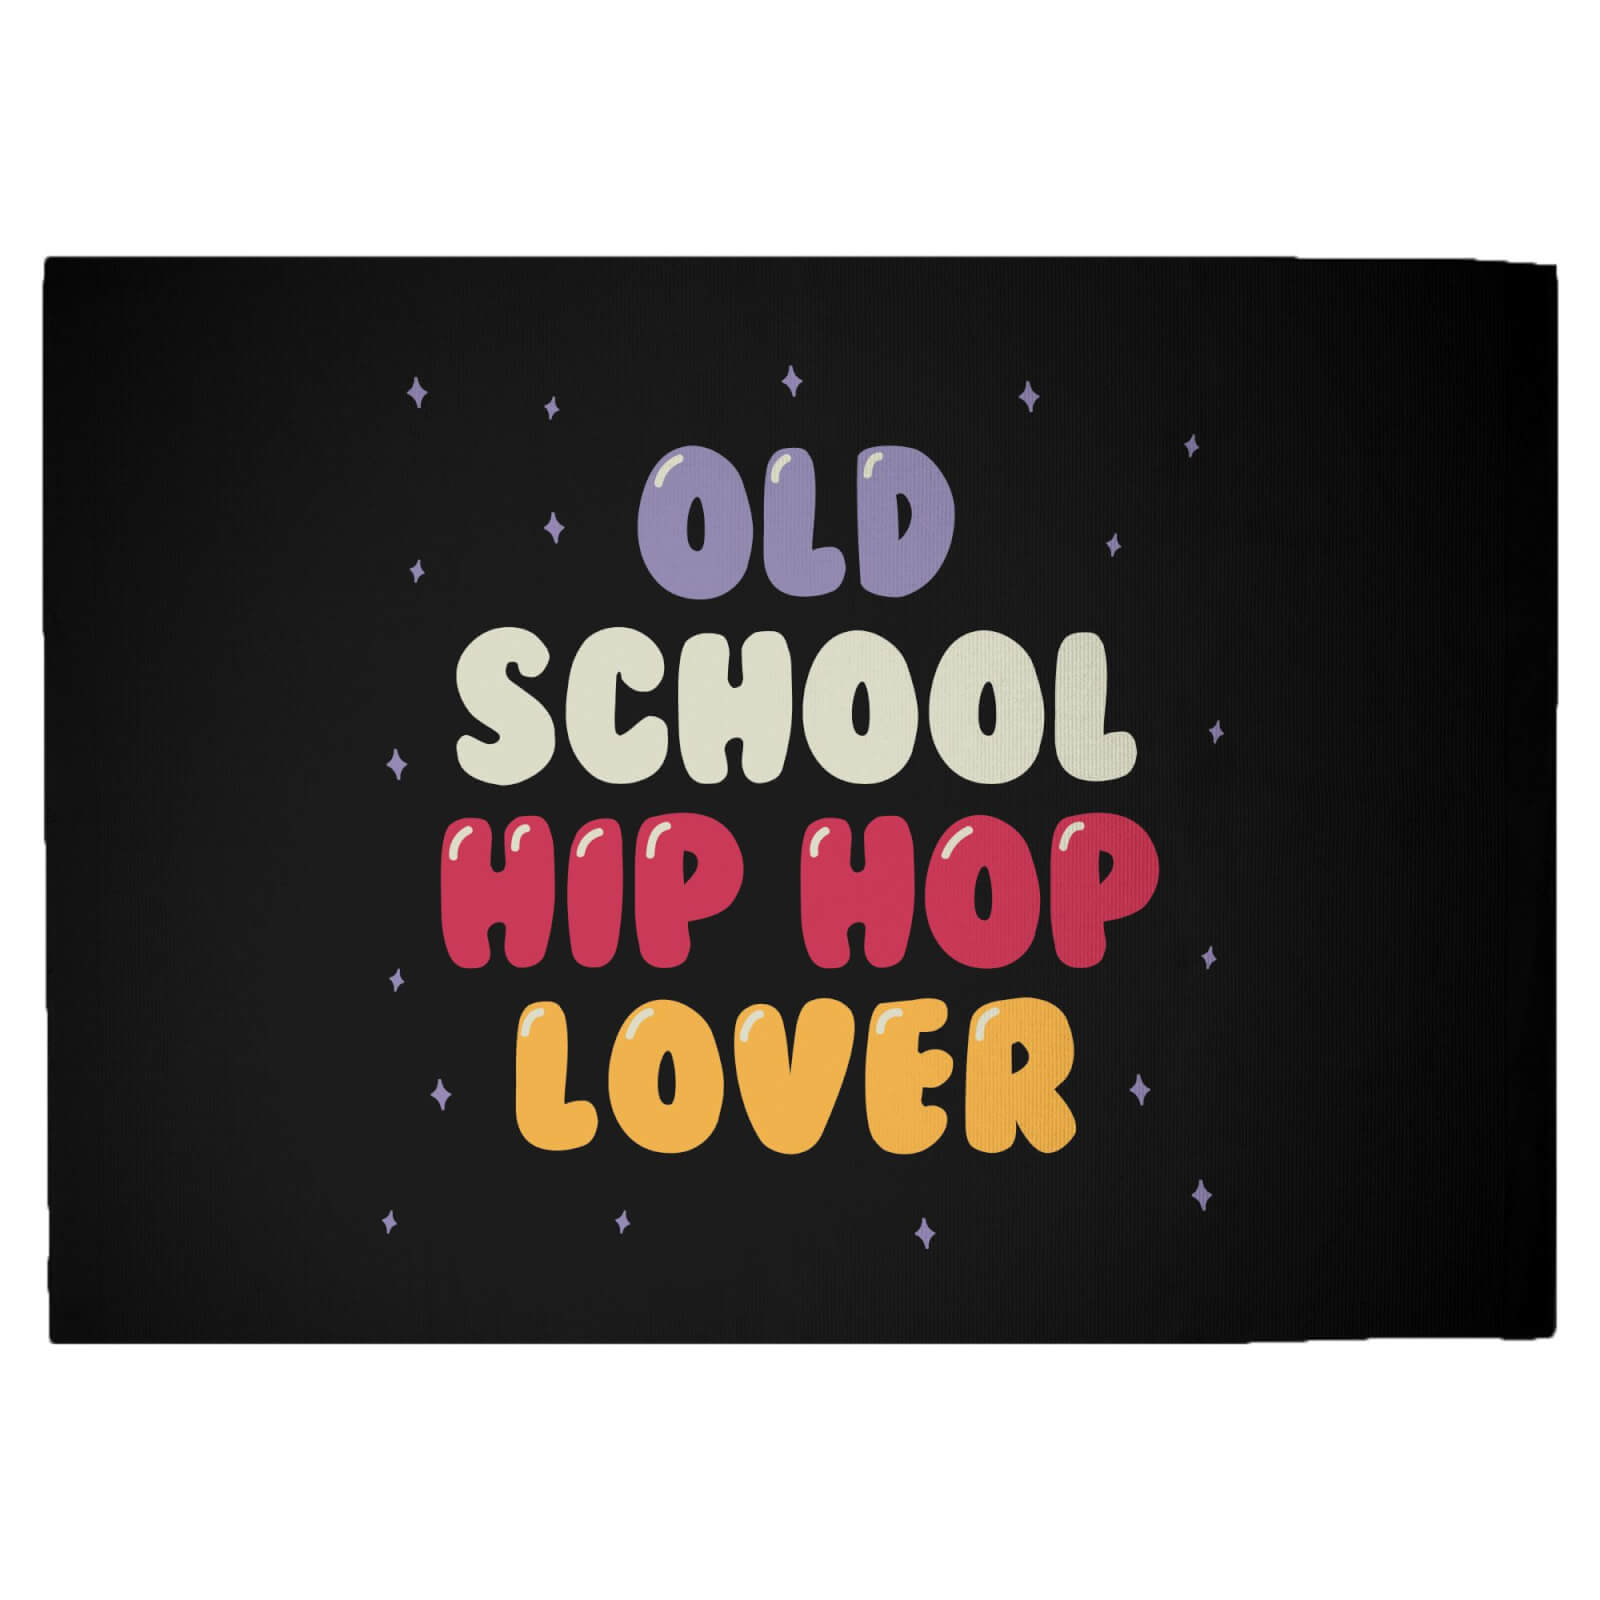 Old School Hip Hop Lover Woven Rug - Large